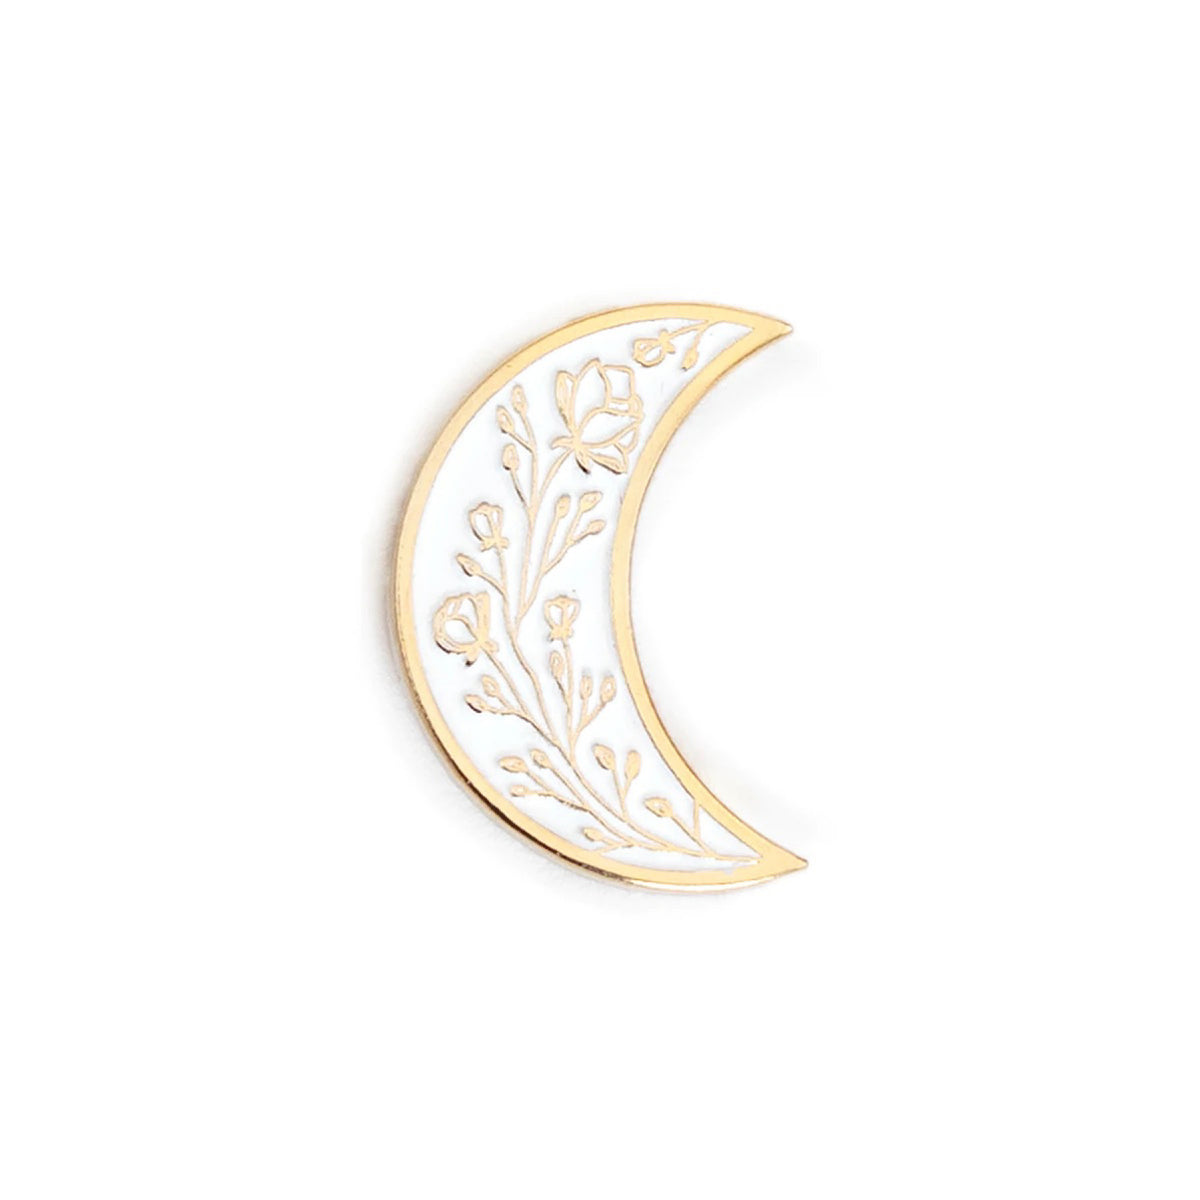 Floral Moon Pin